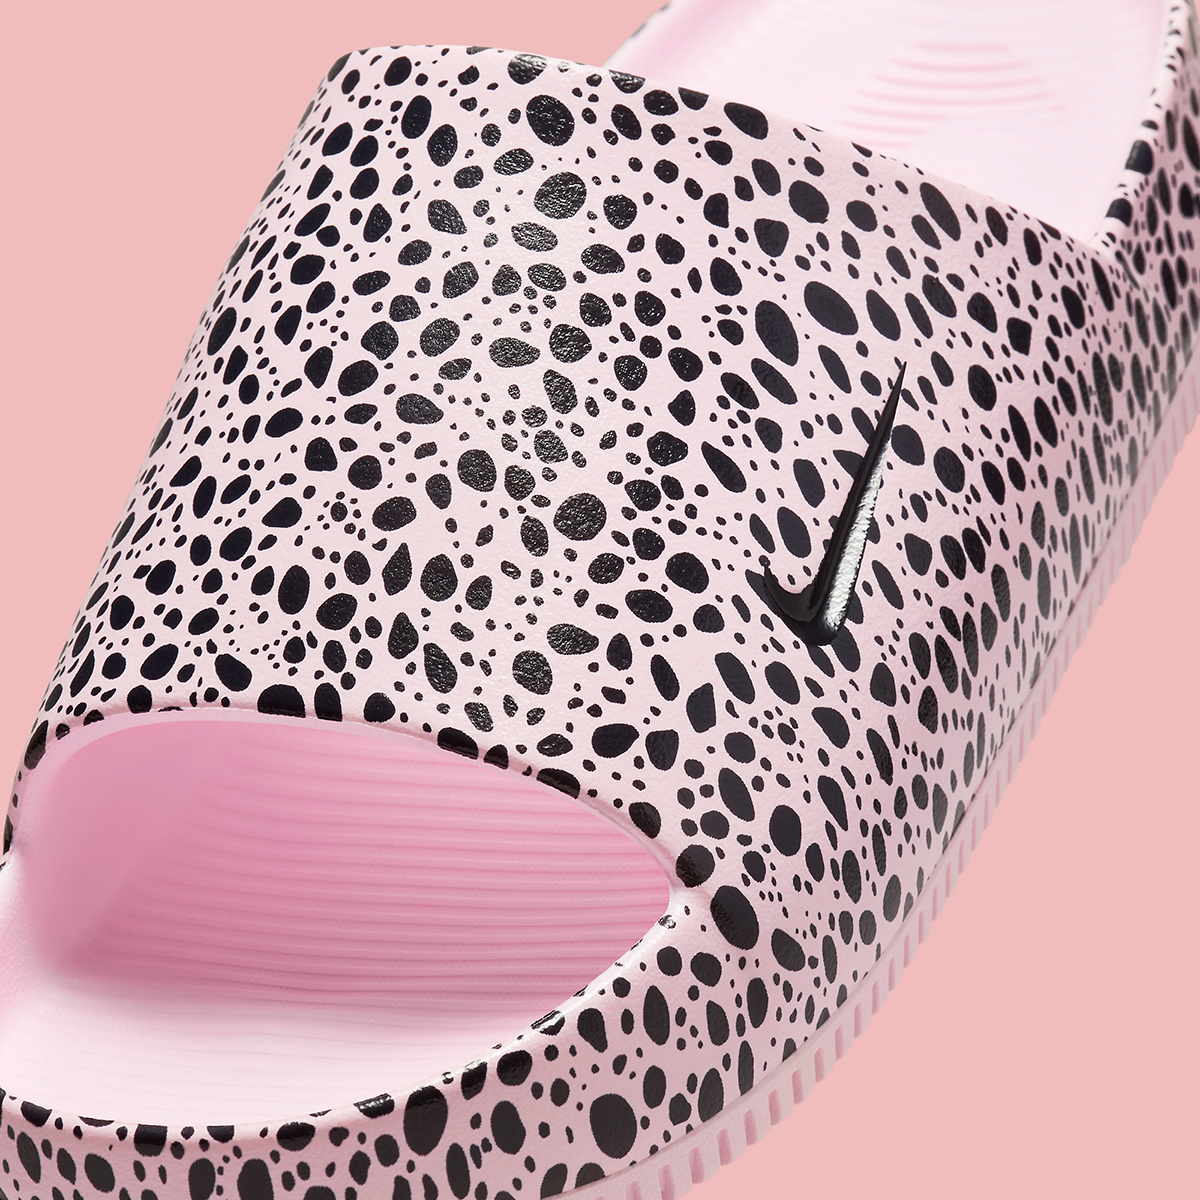 Nike Calm Slide Safari Pink Hm5072 600 3